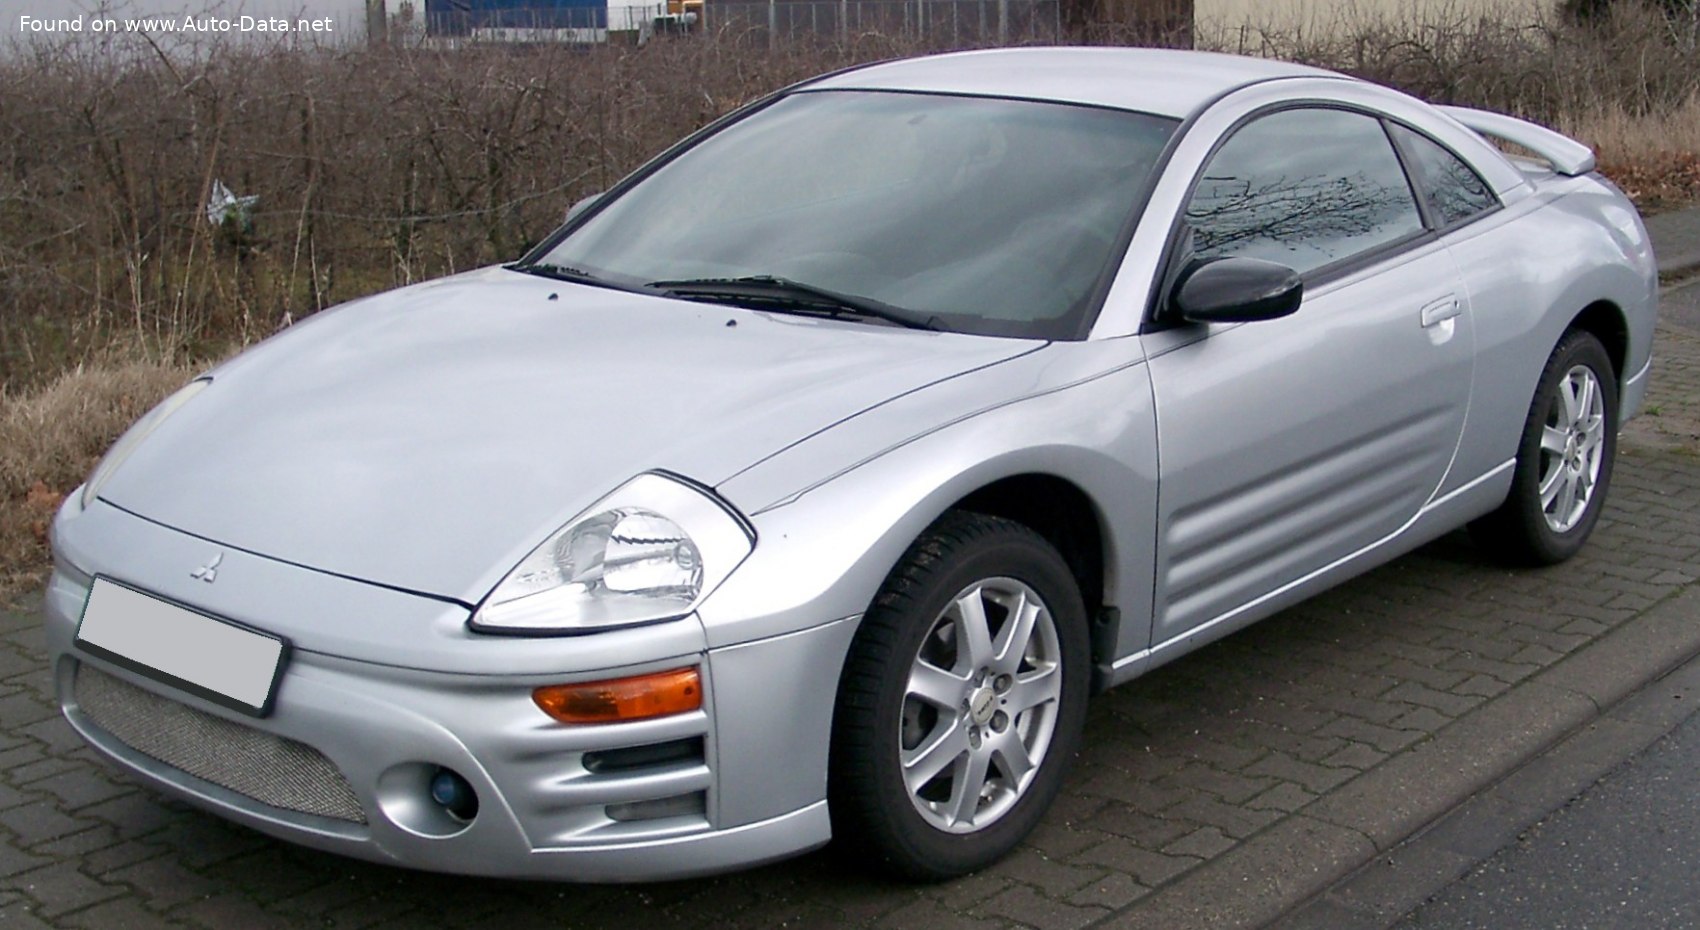 2003 Mitsubishi Eclipse III (3G, facelift 2003) 2.4 (147 Hp) | Technical  specs, data, fuel consumption, Dimensions